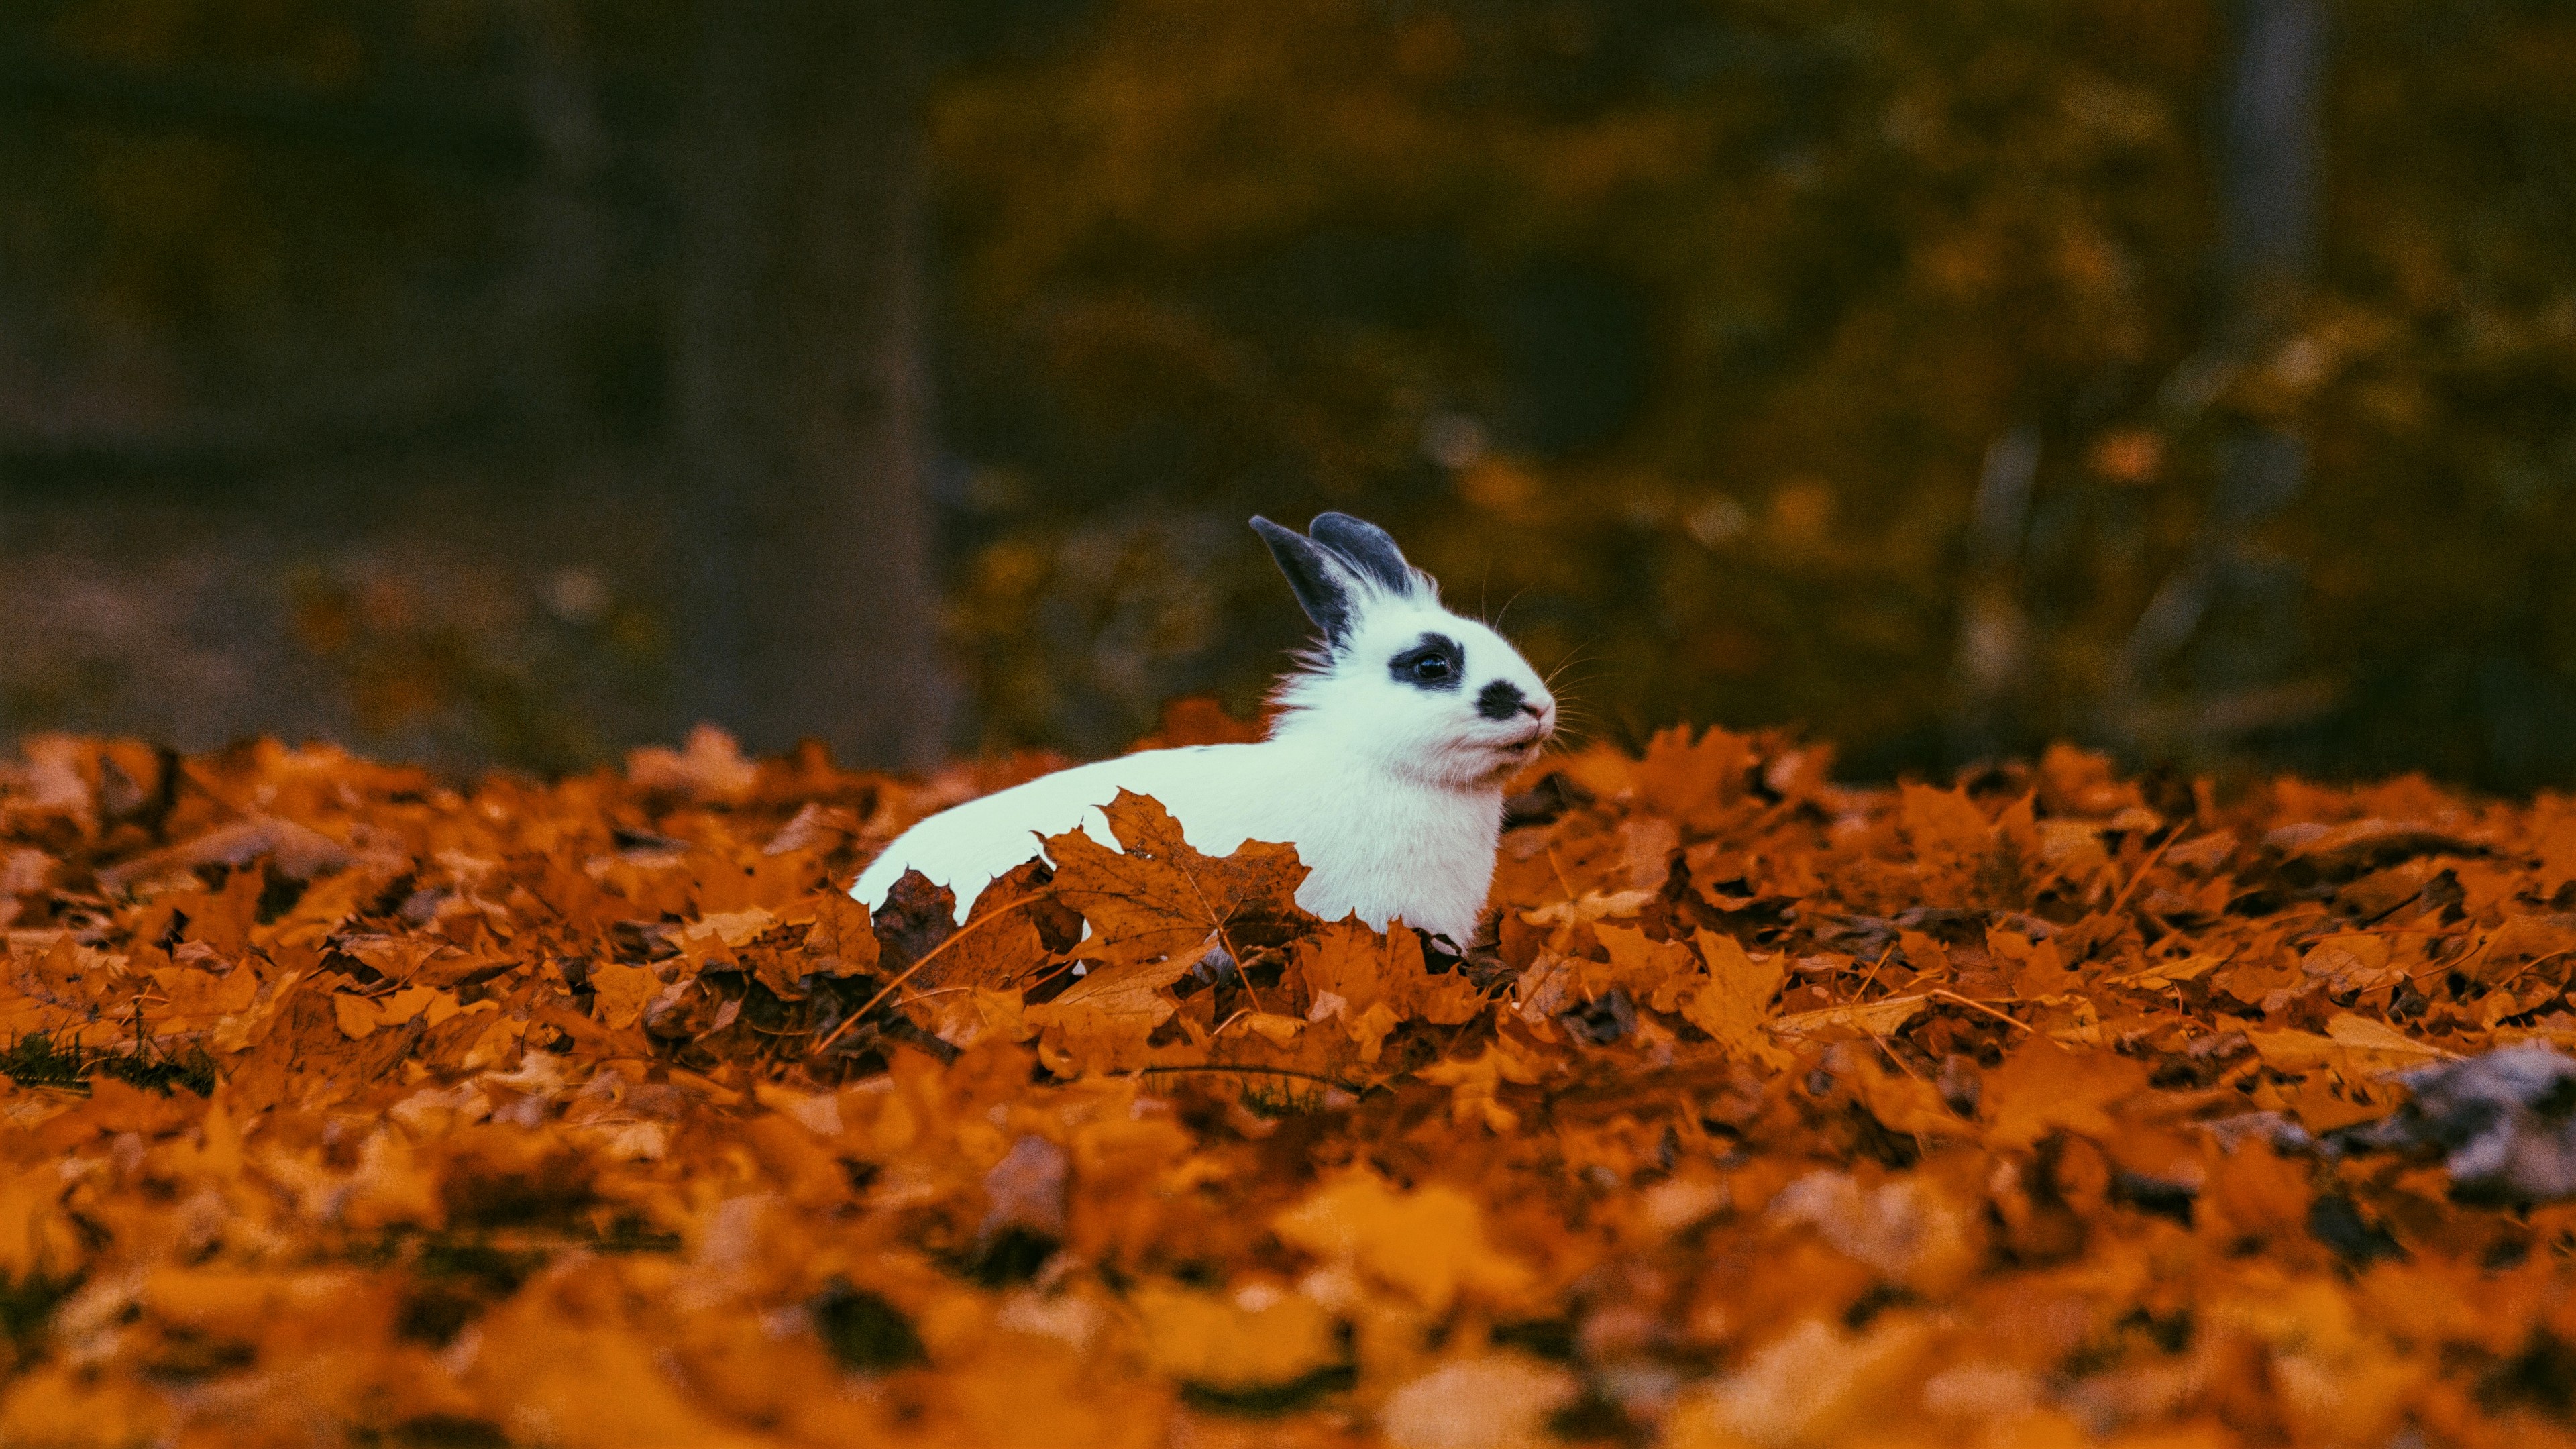 Hare in autumn landscape, HD/4K image, Serene nature, Stunning photography, 3840x2160 4K Desktop